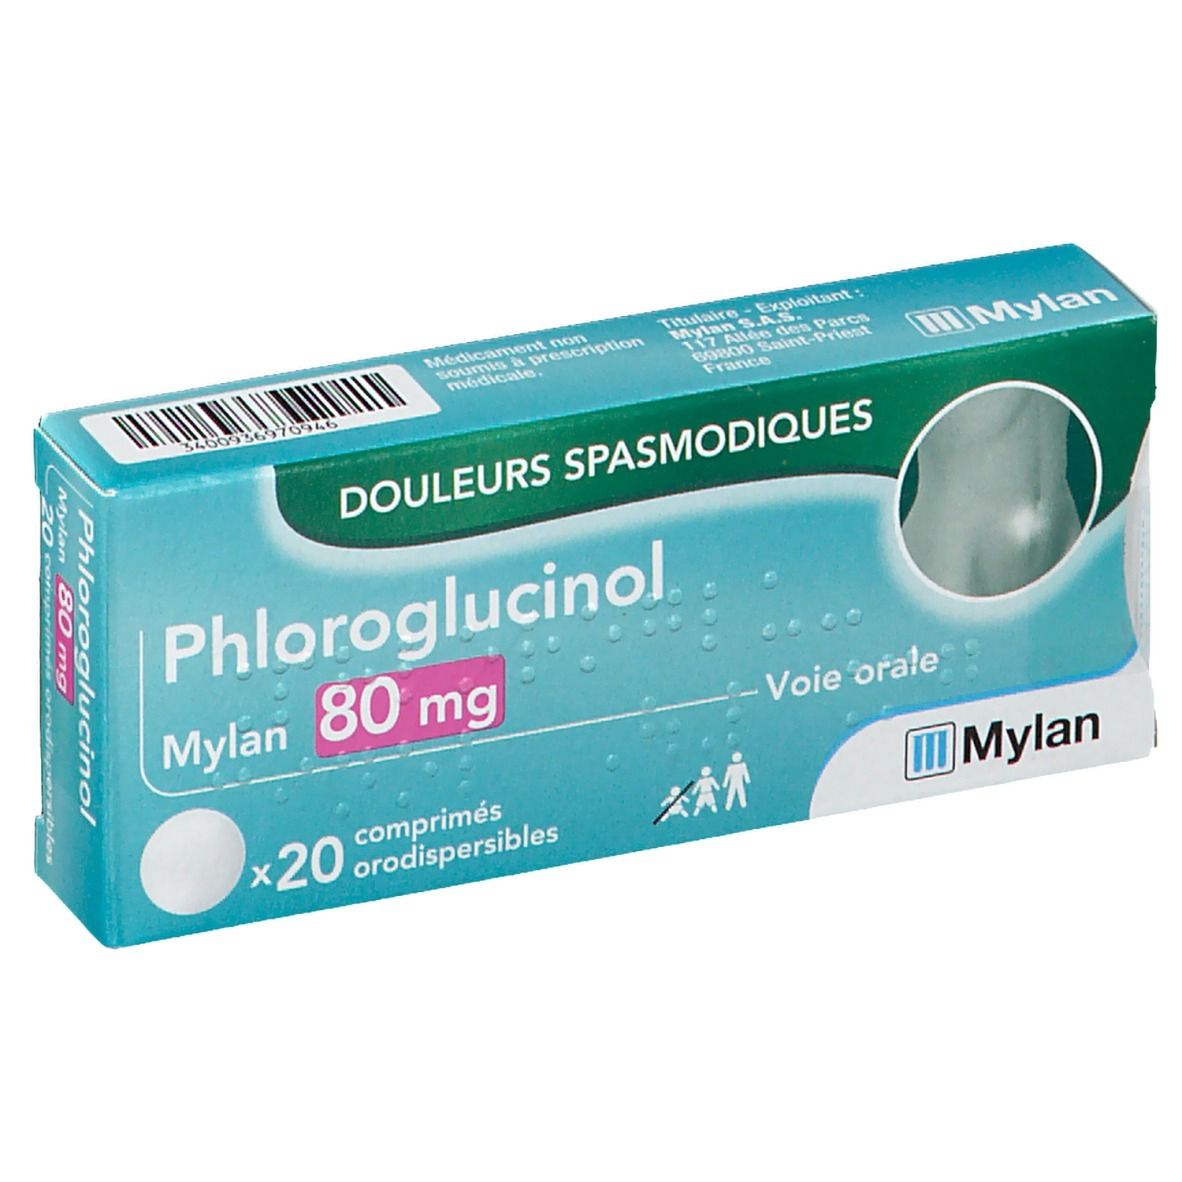 Phloroglucinol Mylan 80 mg